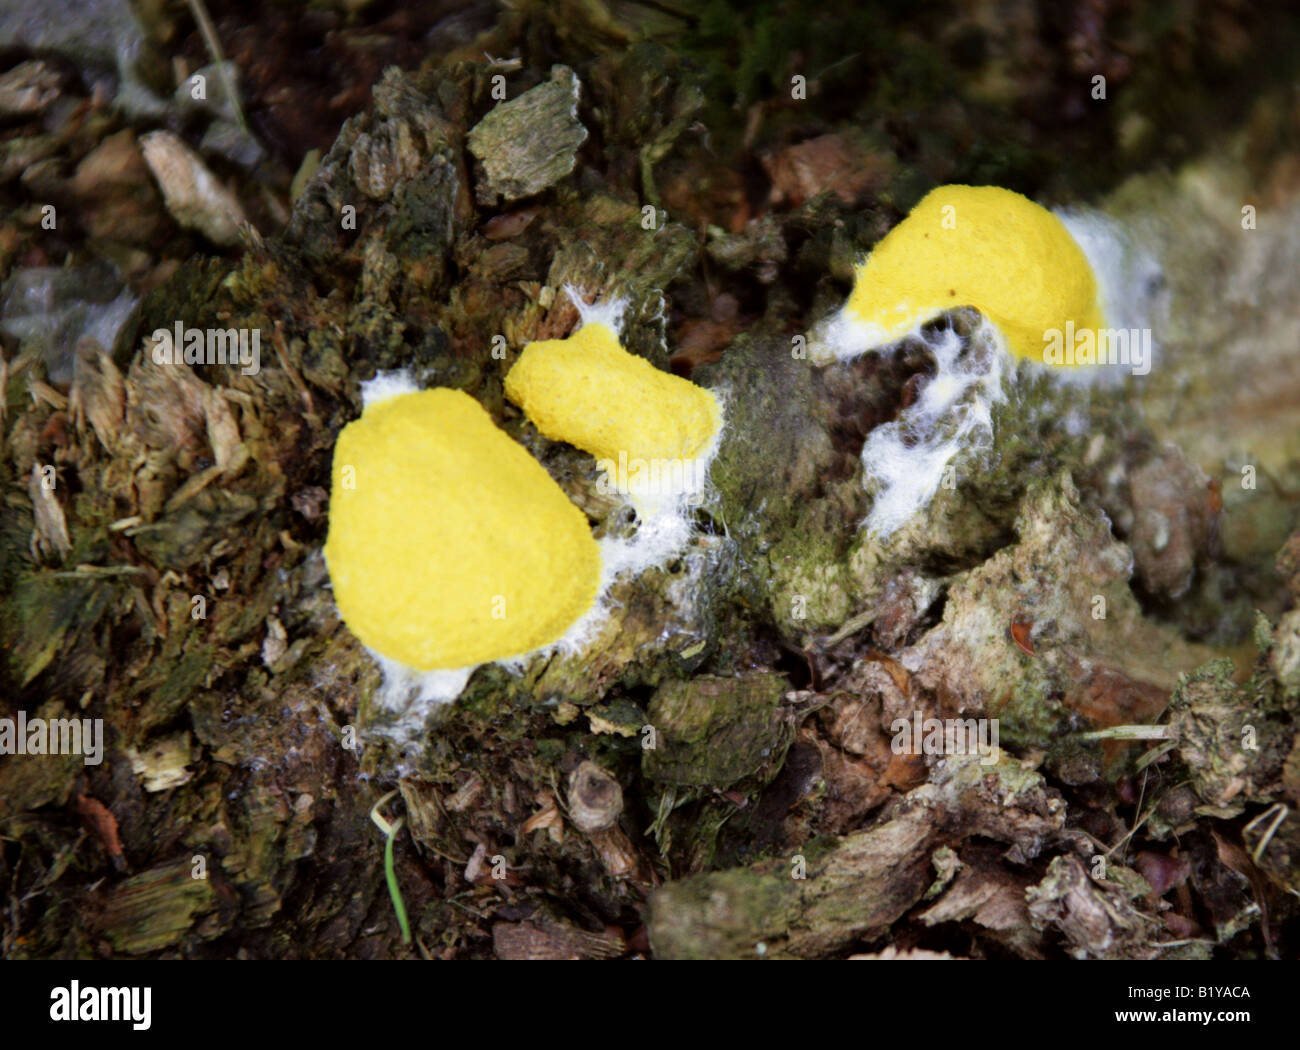 Sulphur Slime Fungus on Oak Stump, Fuligo septica, Physaraceae, Amoebozoa Stock Photo